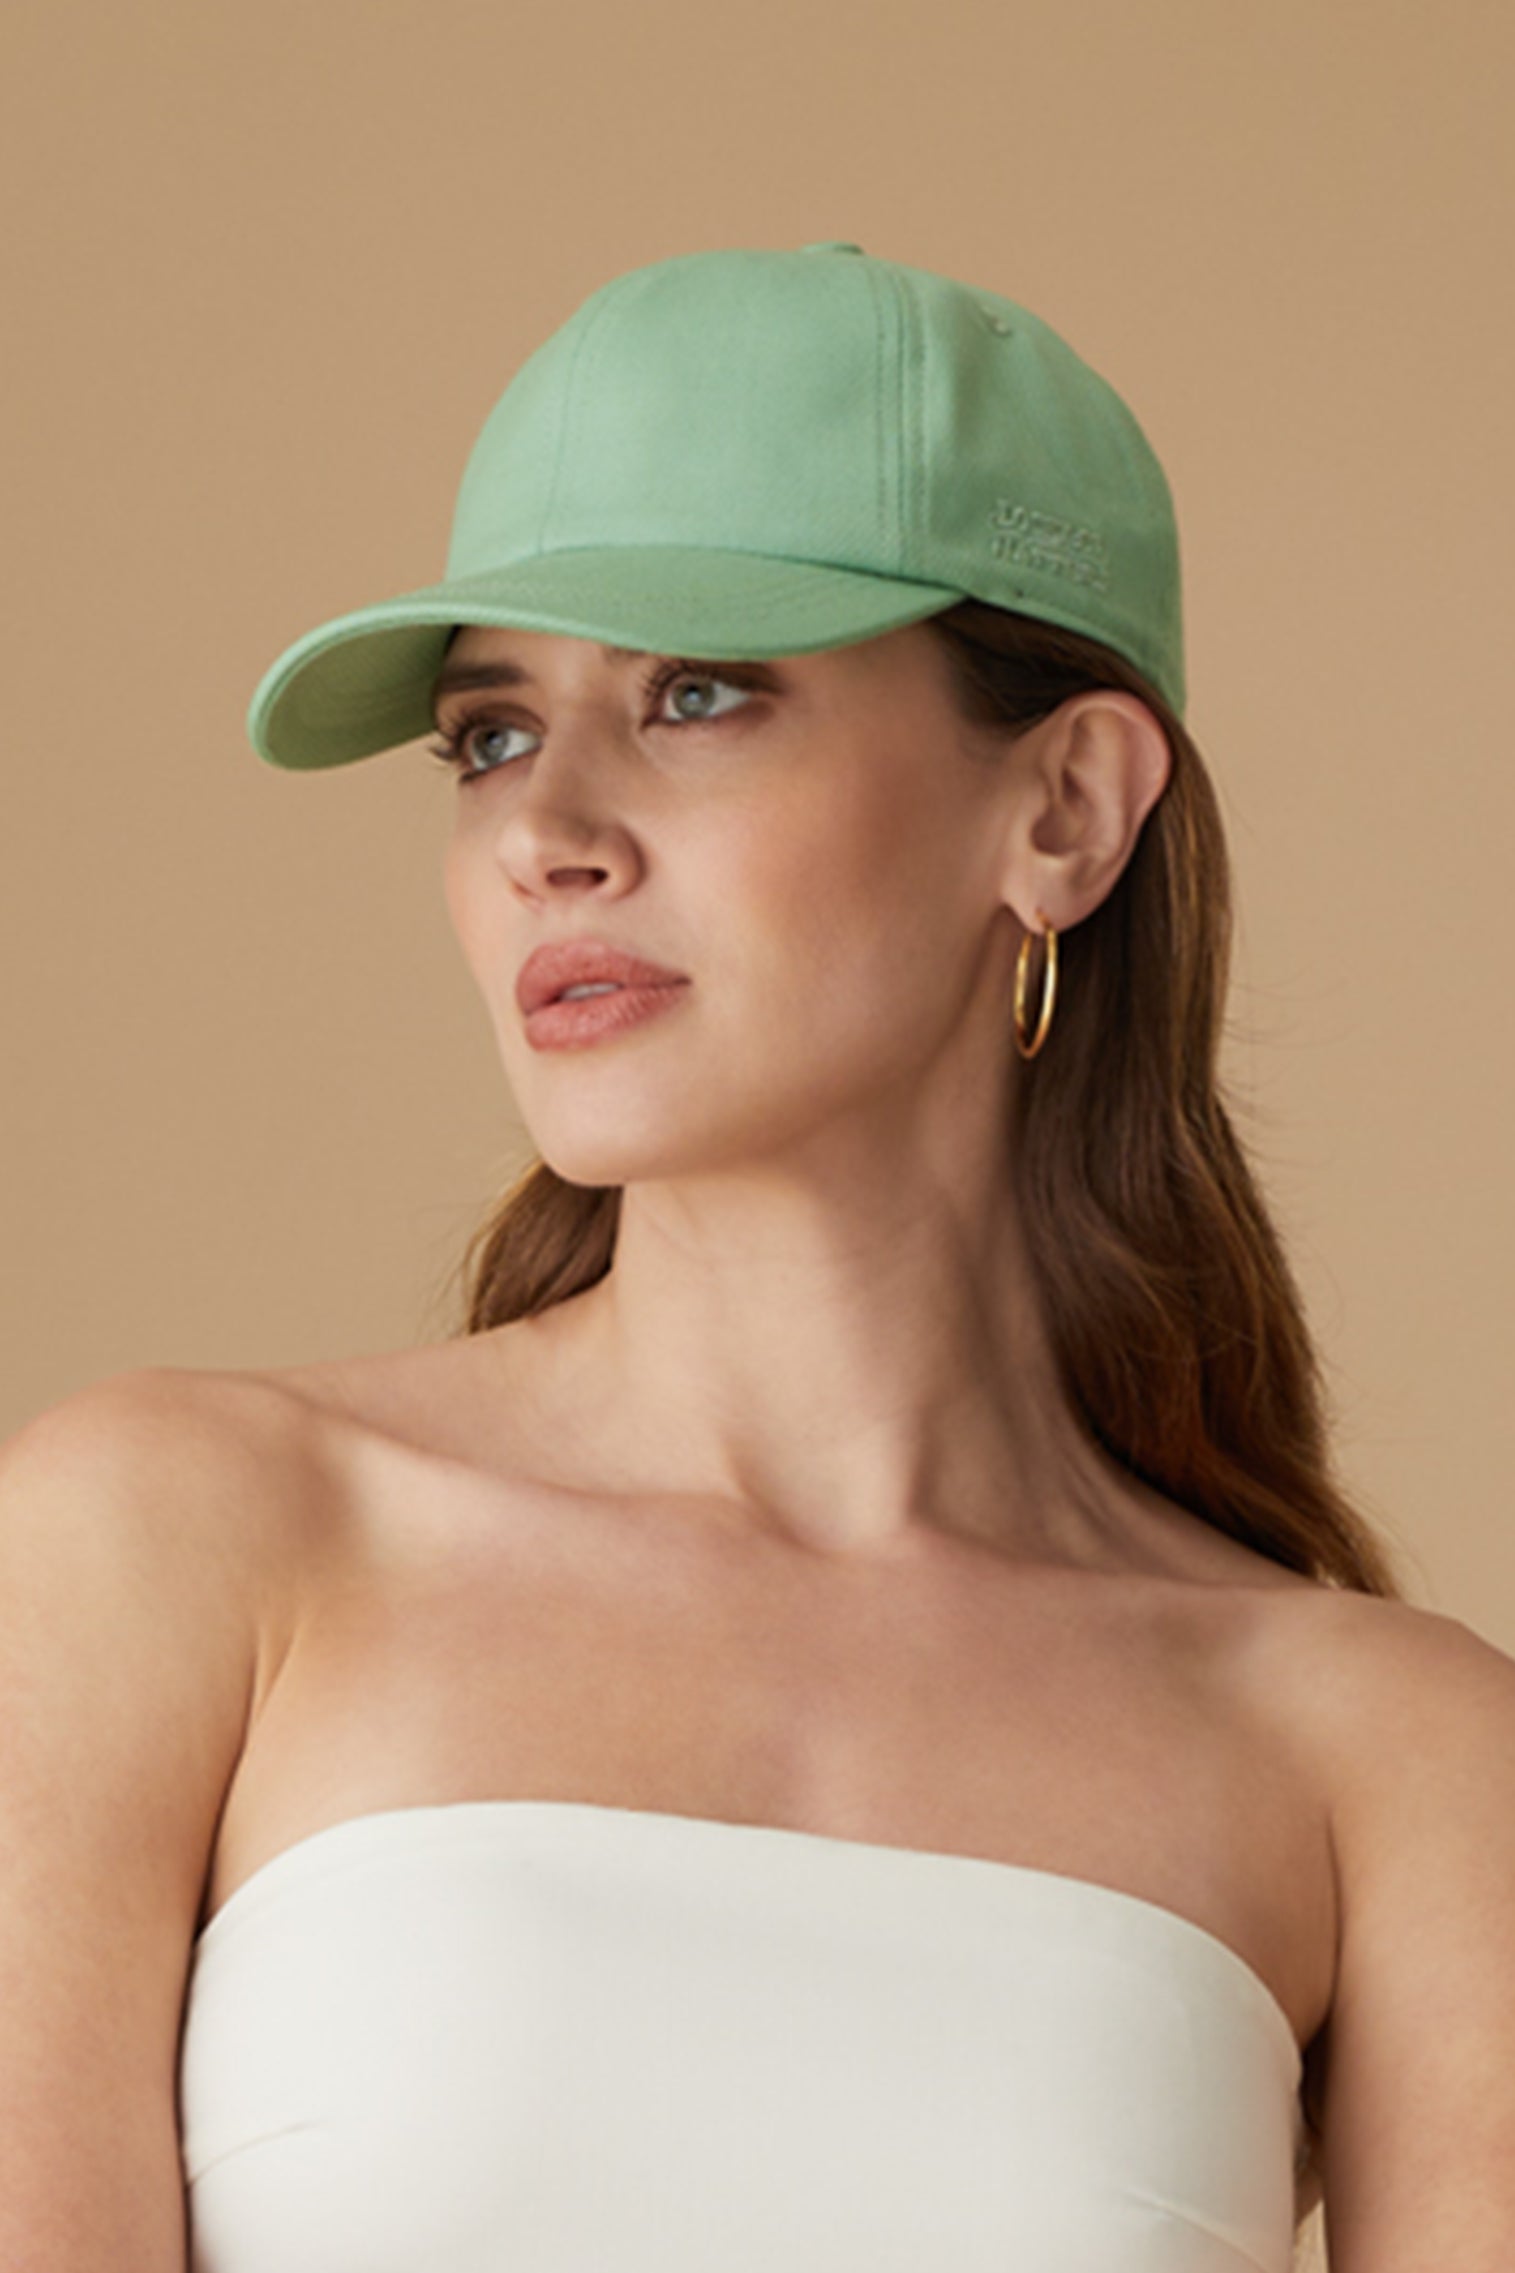 Adjustable Green Baseball Cap - Womens Featured - Lock & Co. Hatters London UK